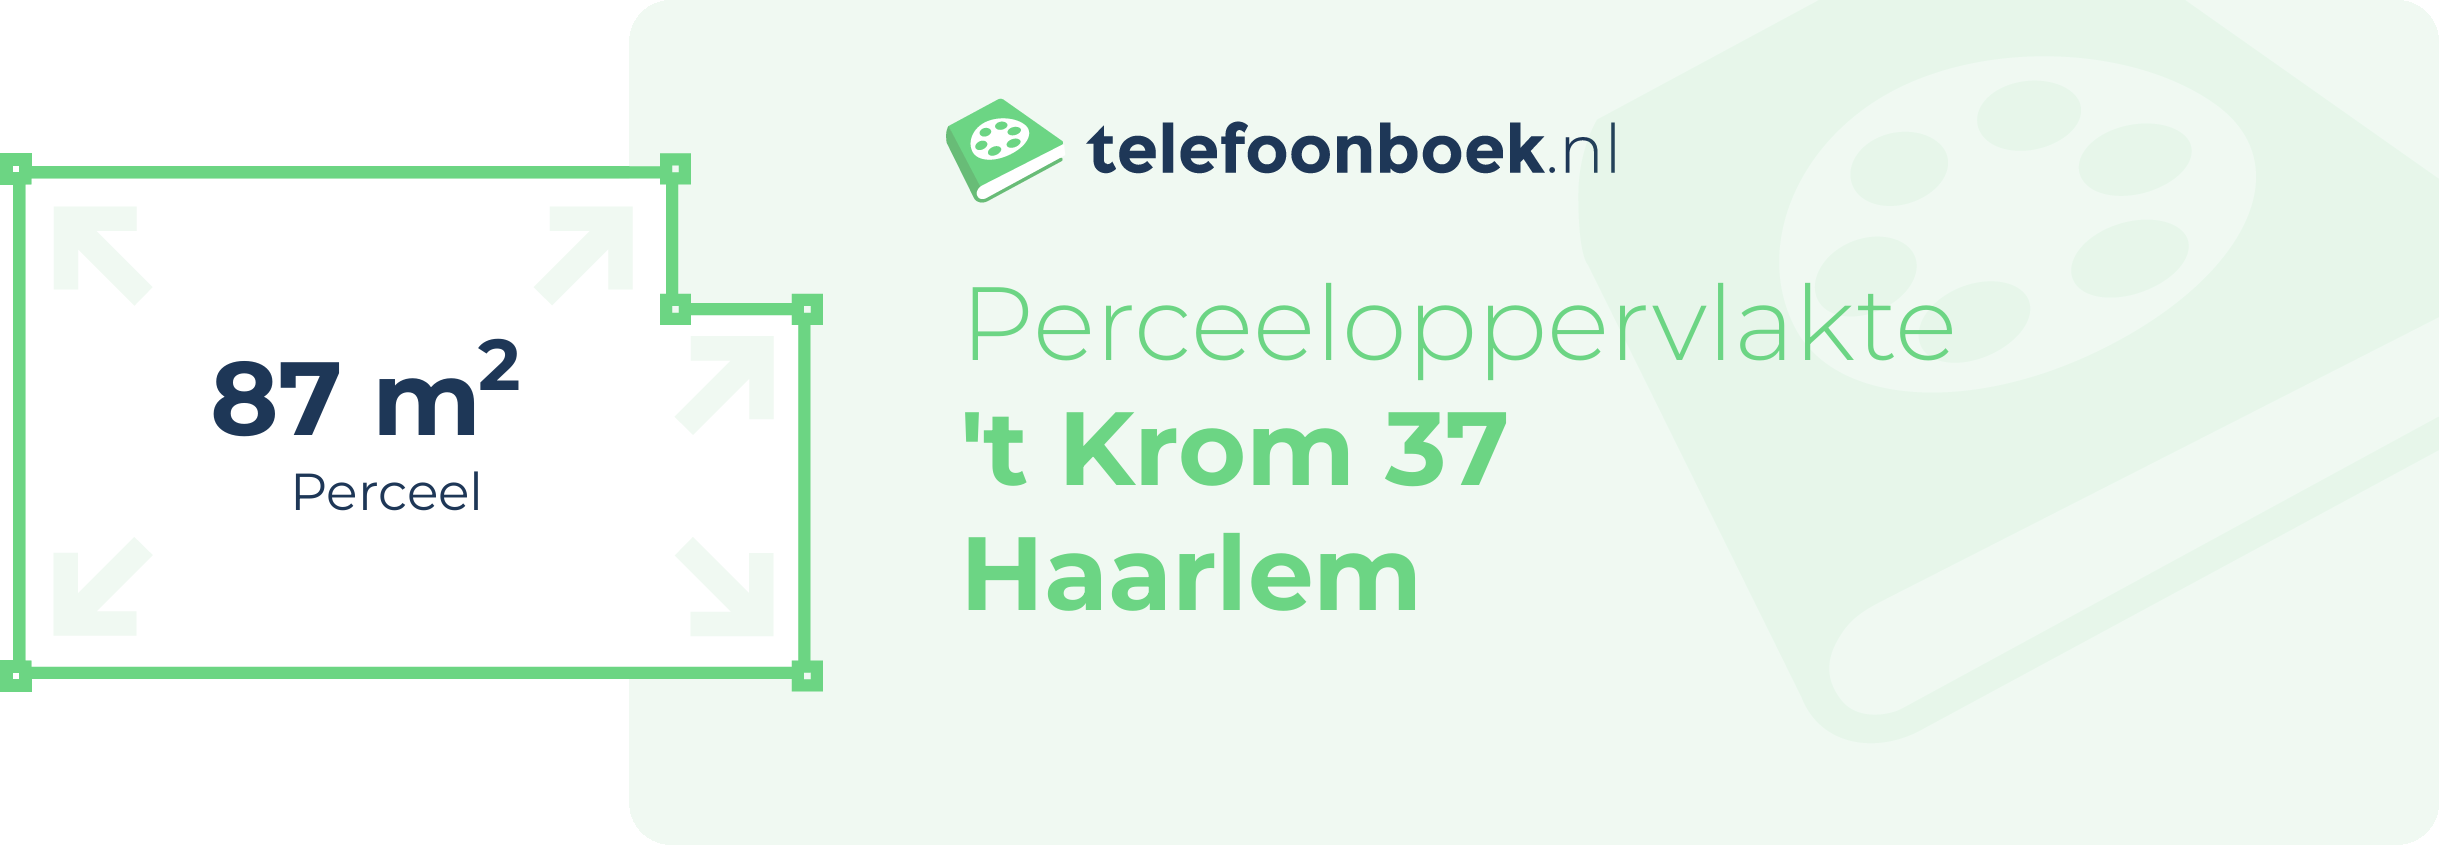 Perceeloppervlakte 't Krom 37 Haarlem